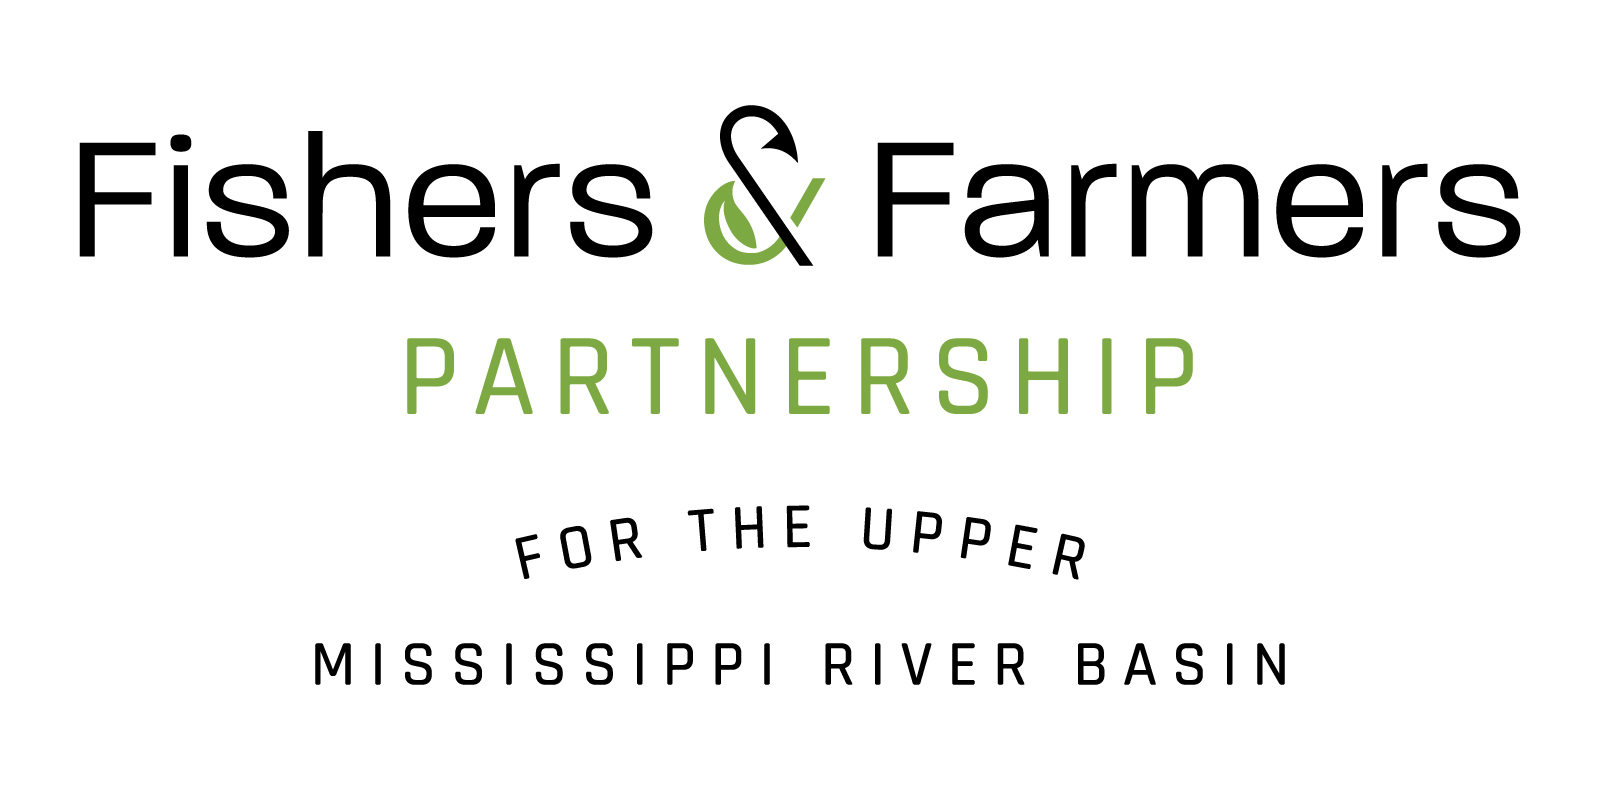 Fishers & Farmers Partnership